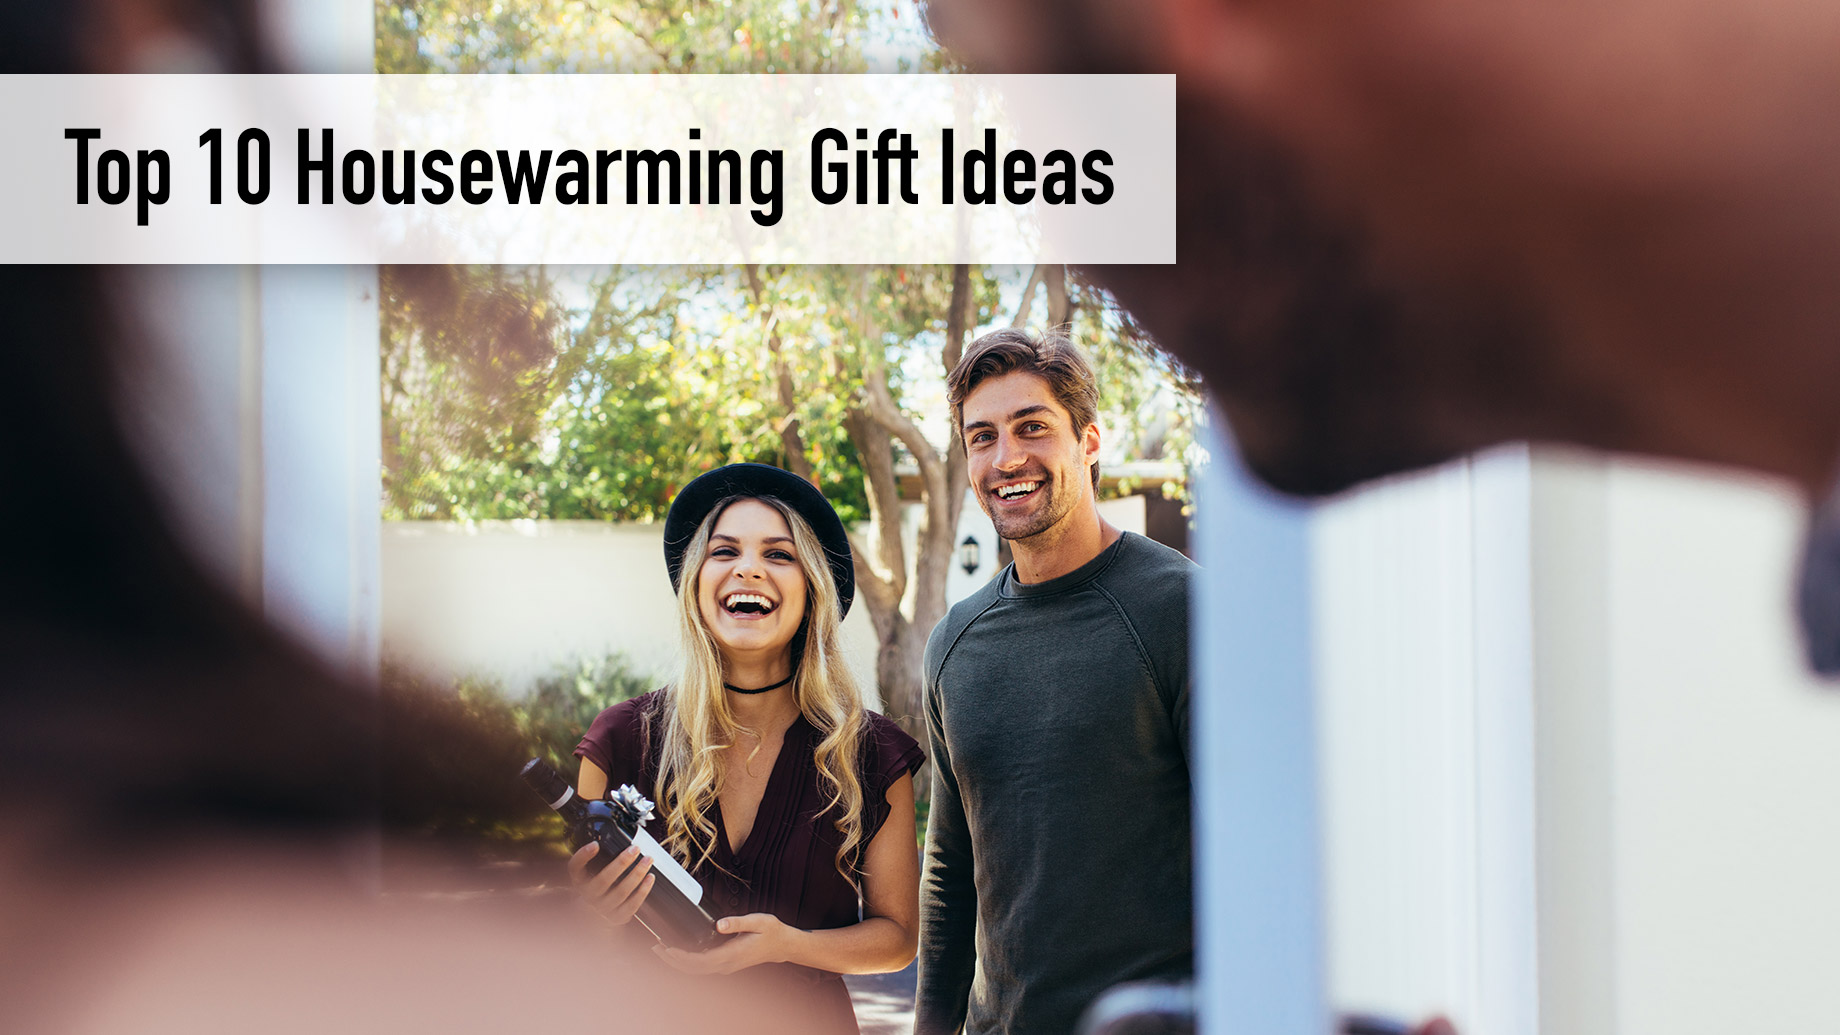 Top 10 Housewarming Gift Ideas